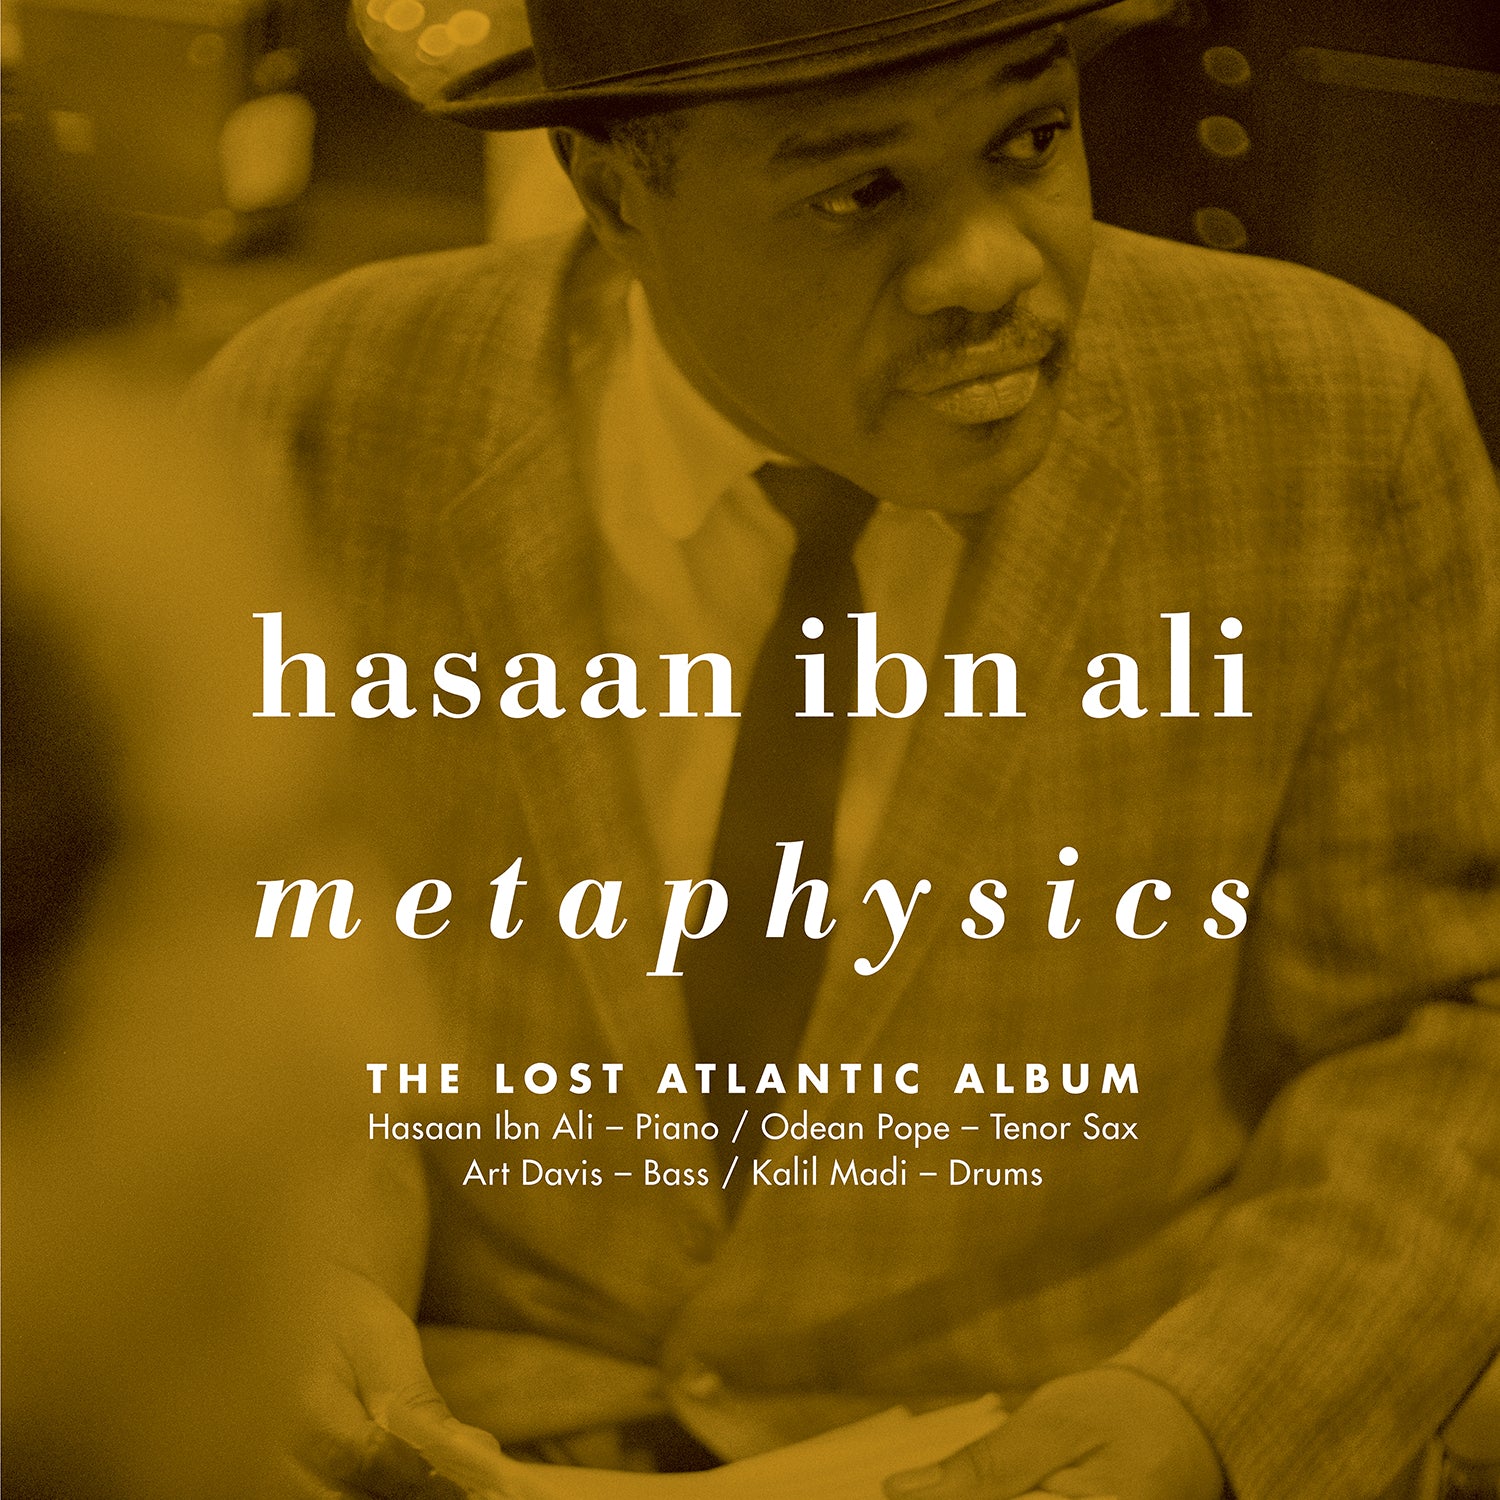 Hasaan Ibn Ali  "Metaphysics: The Lost Atlantic Album"